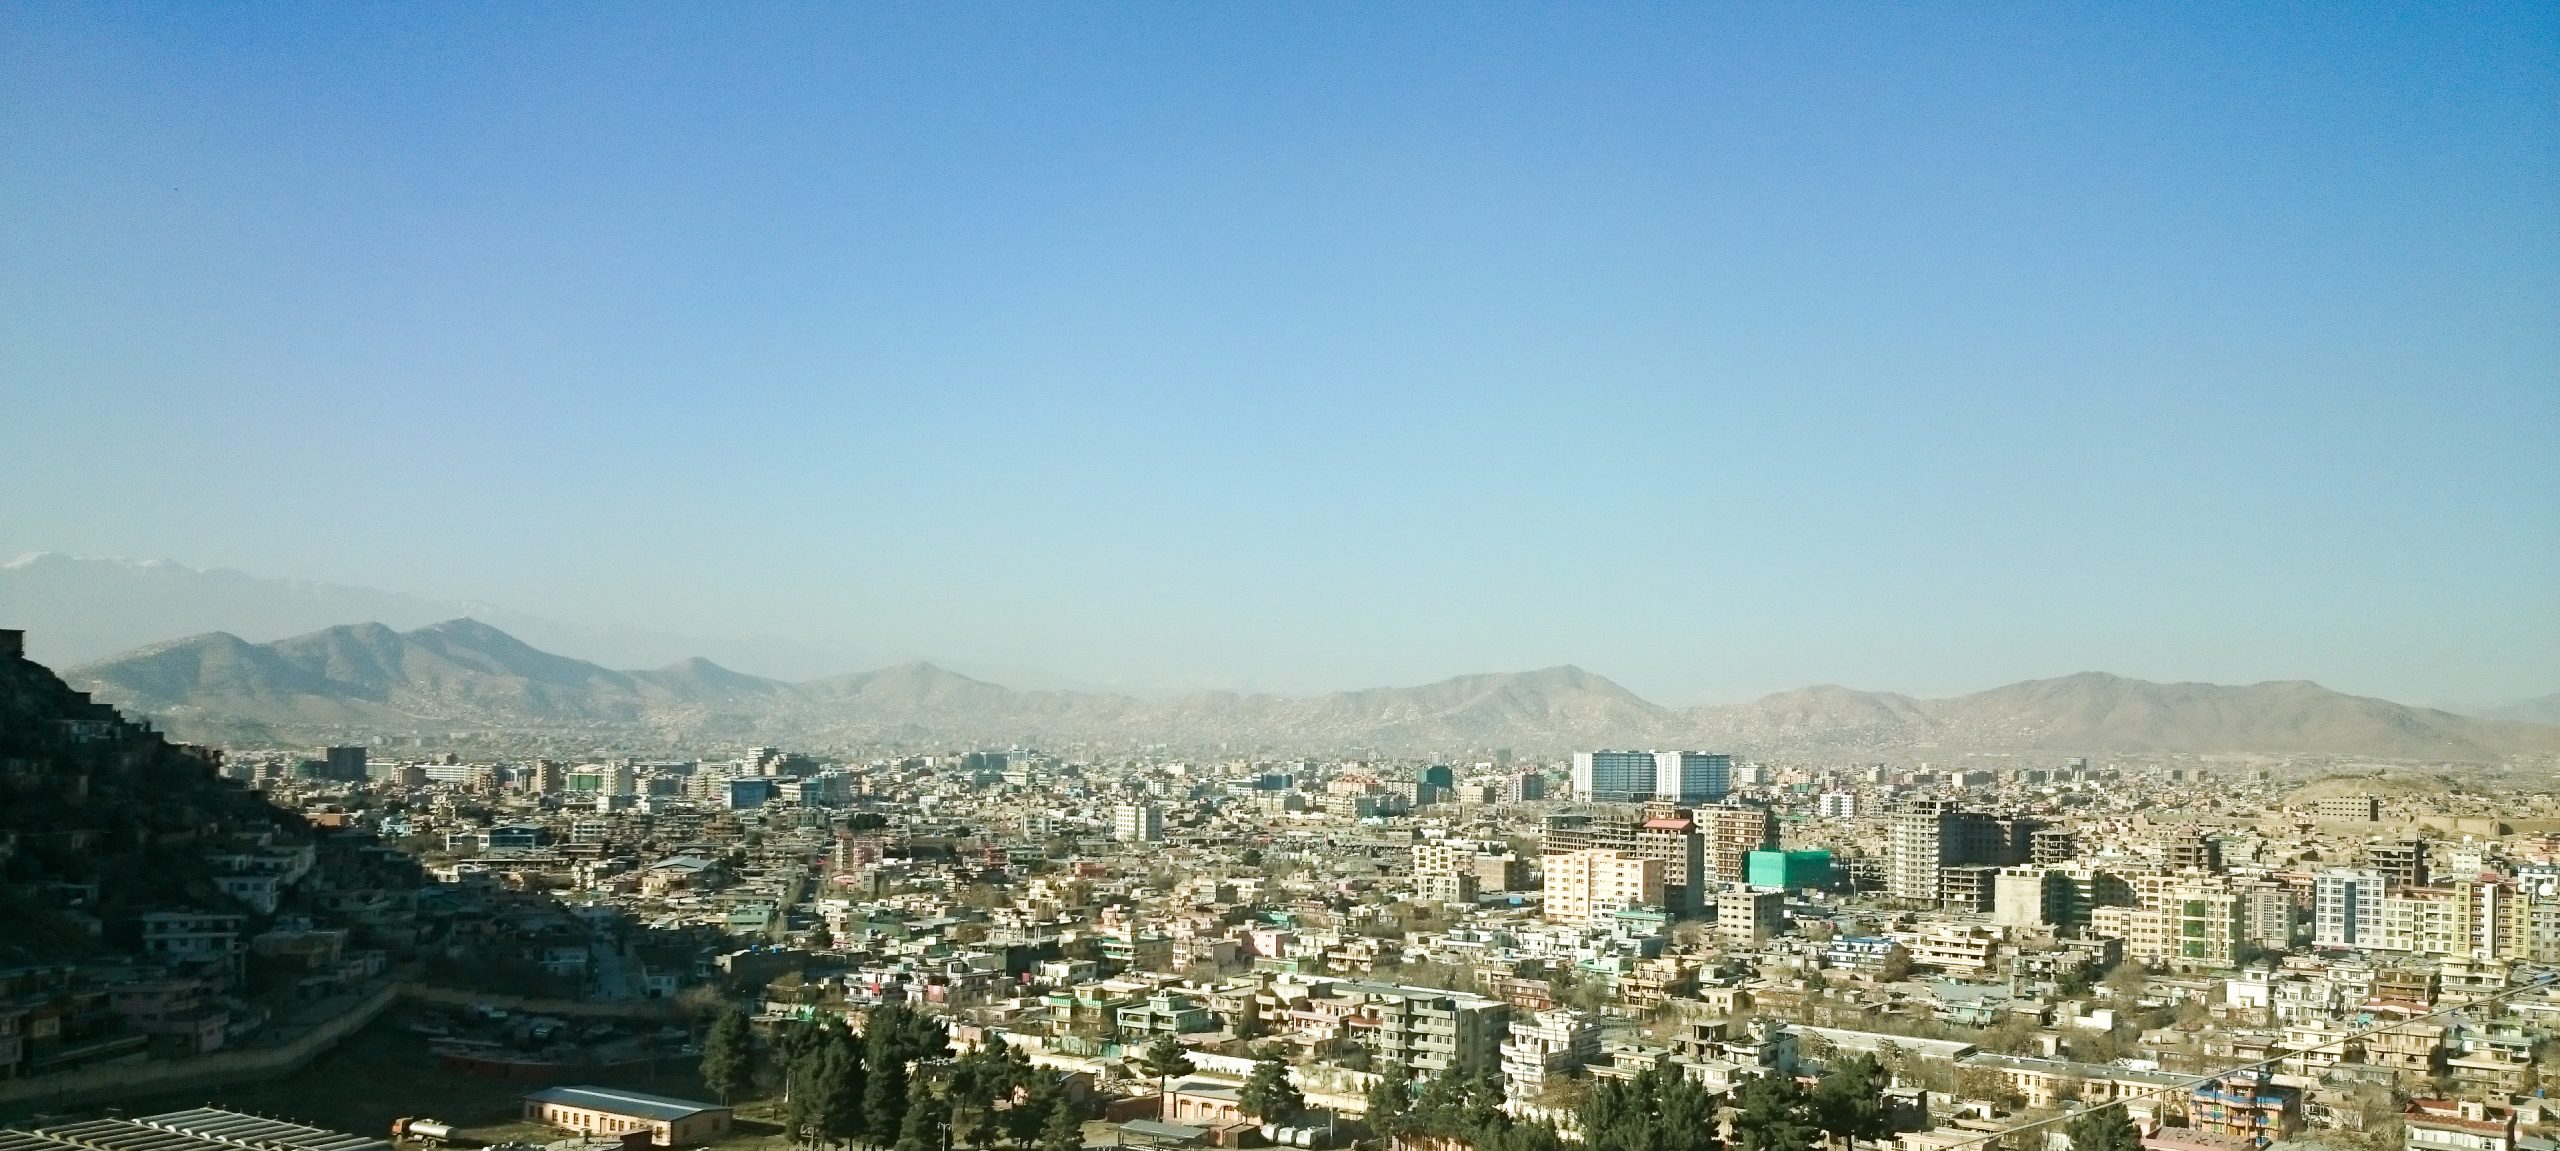 Kabul, stolica Afganistanu. Fot. Shutterstock